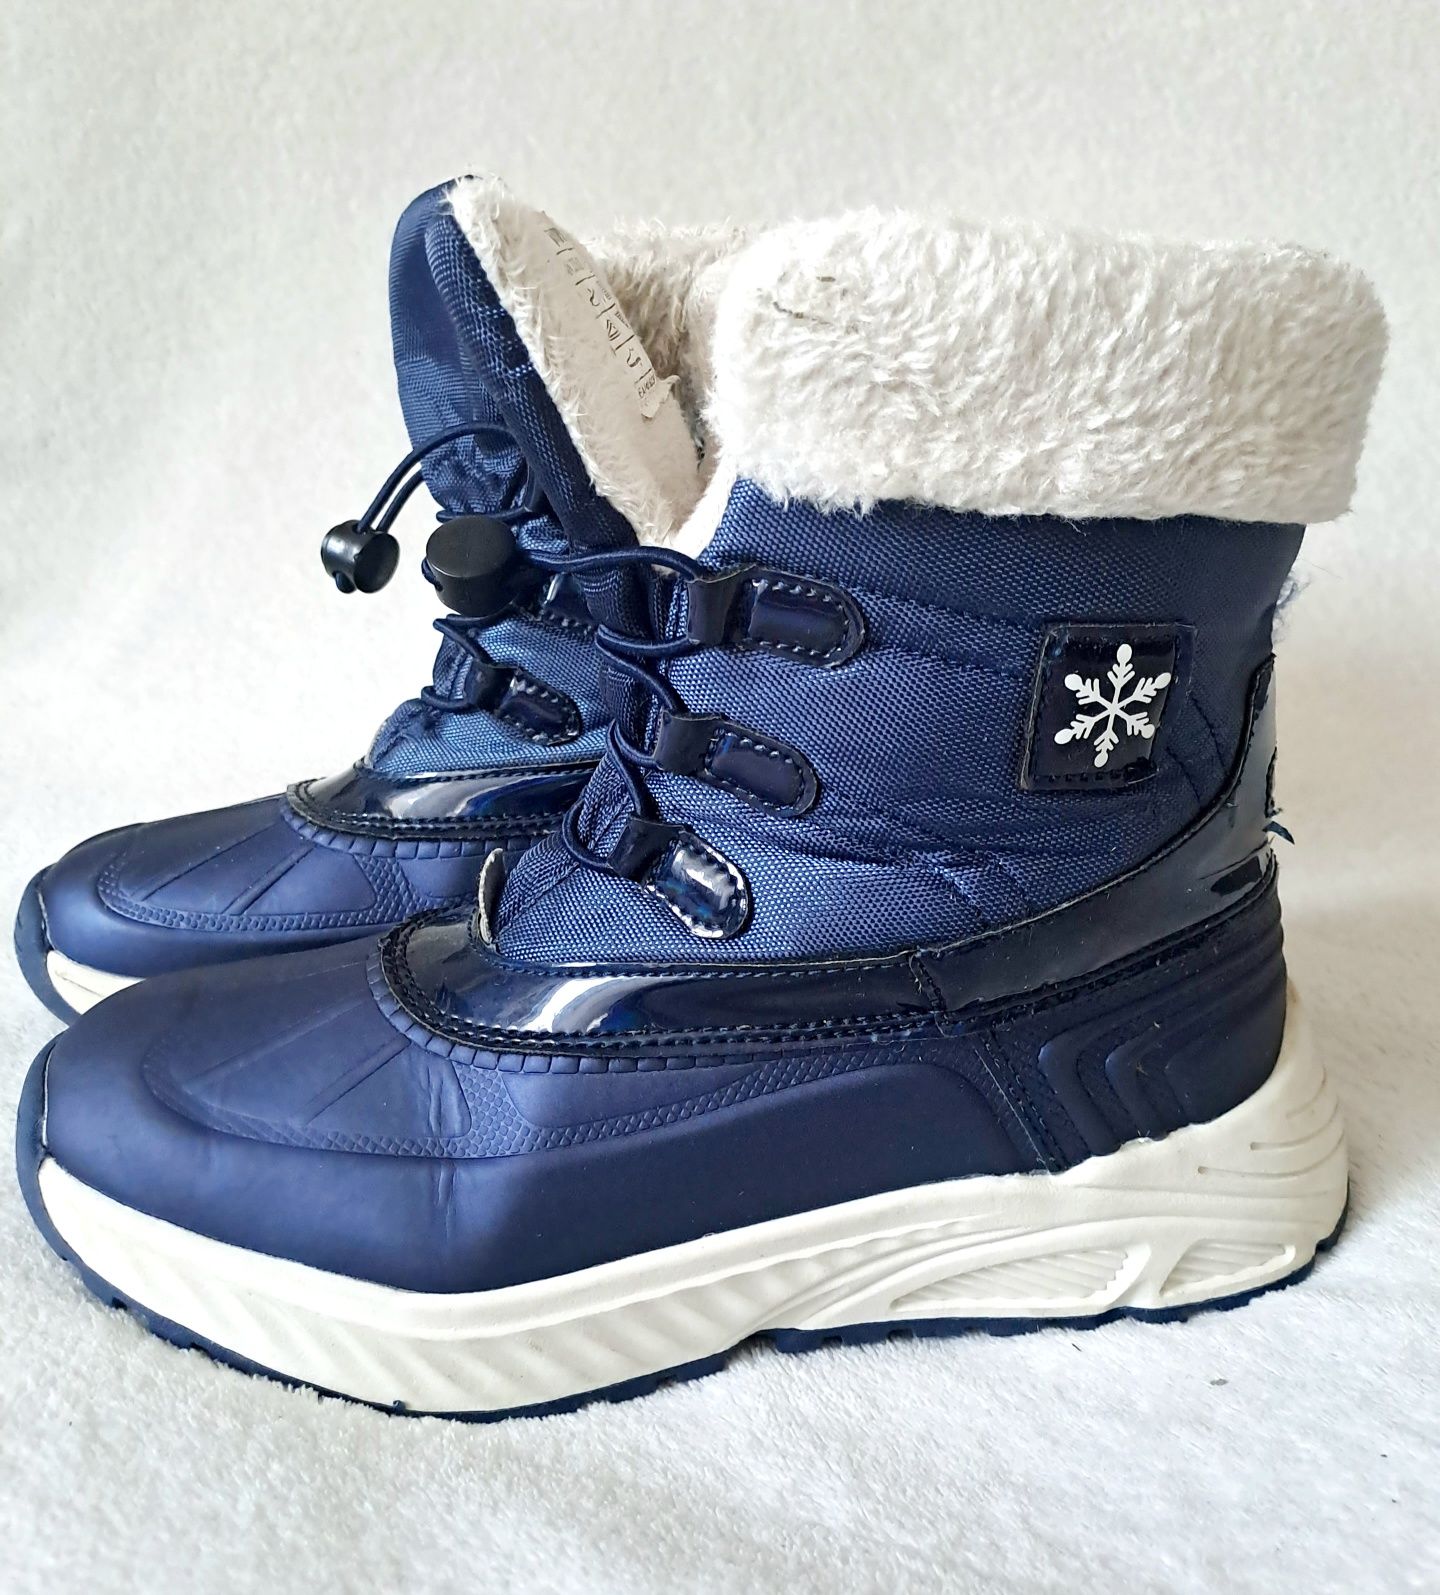 Śniegowce buty zimowe Pepperts 37